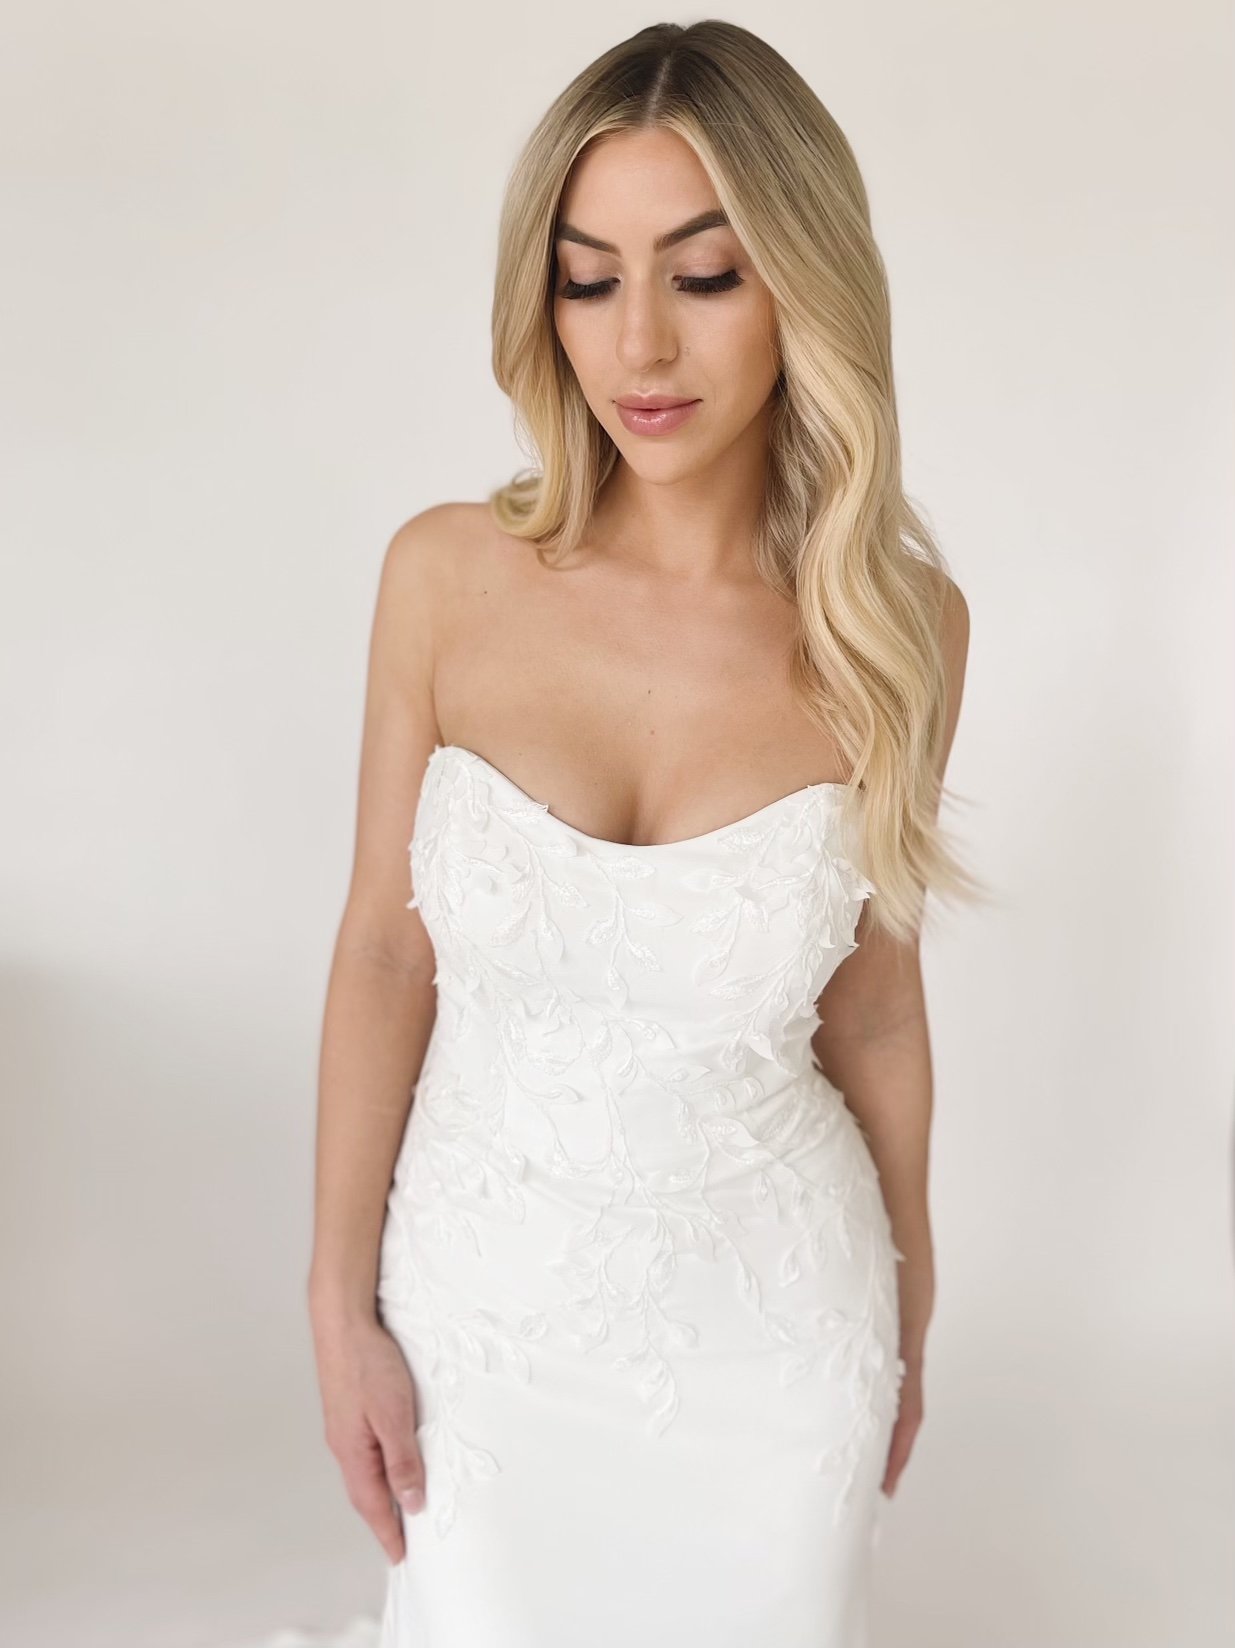 Stella York 7293 Sample Wedding Dress Save 60% - Stillwhite